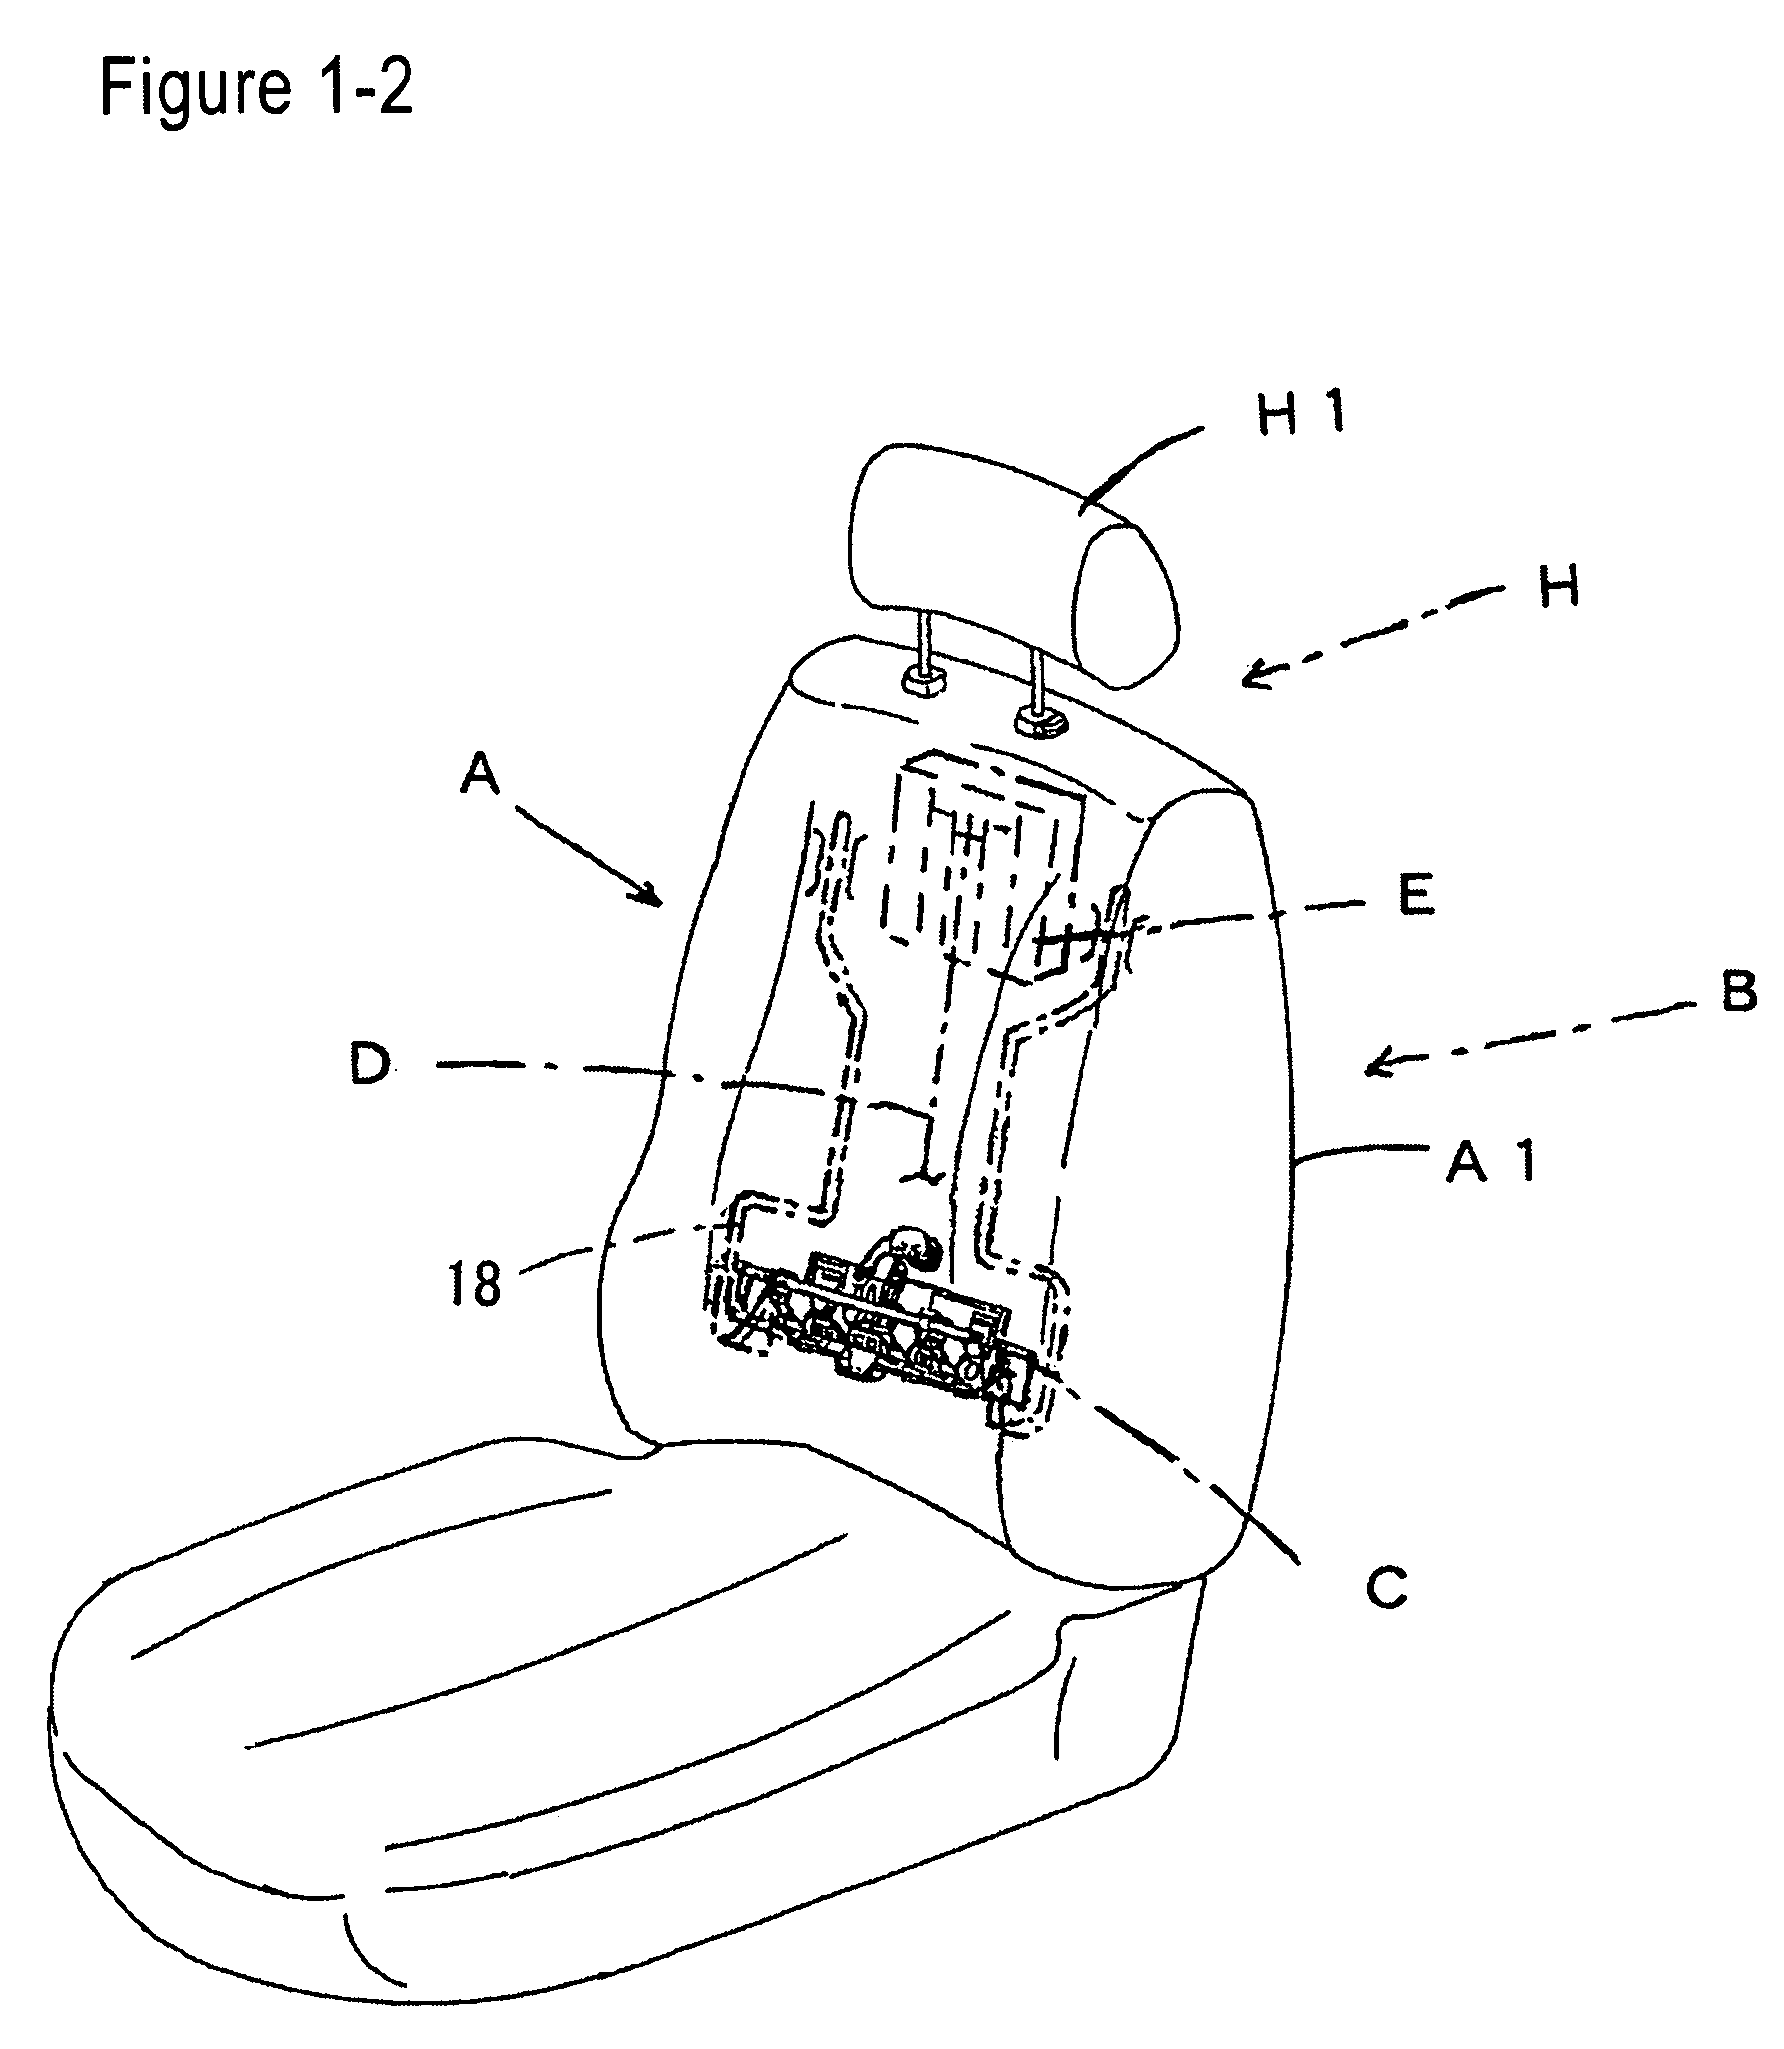 Headrest device for active headrest